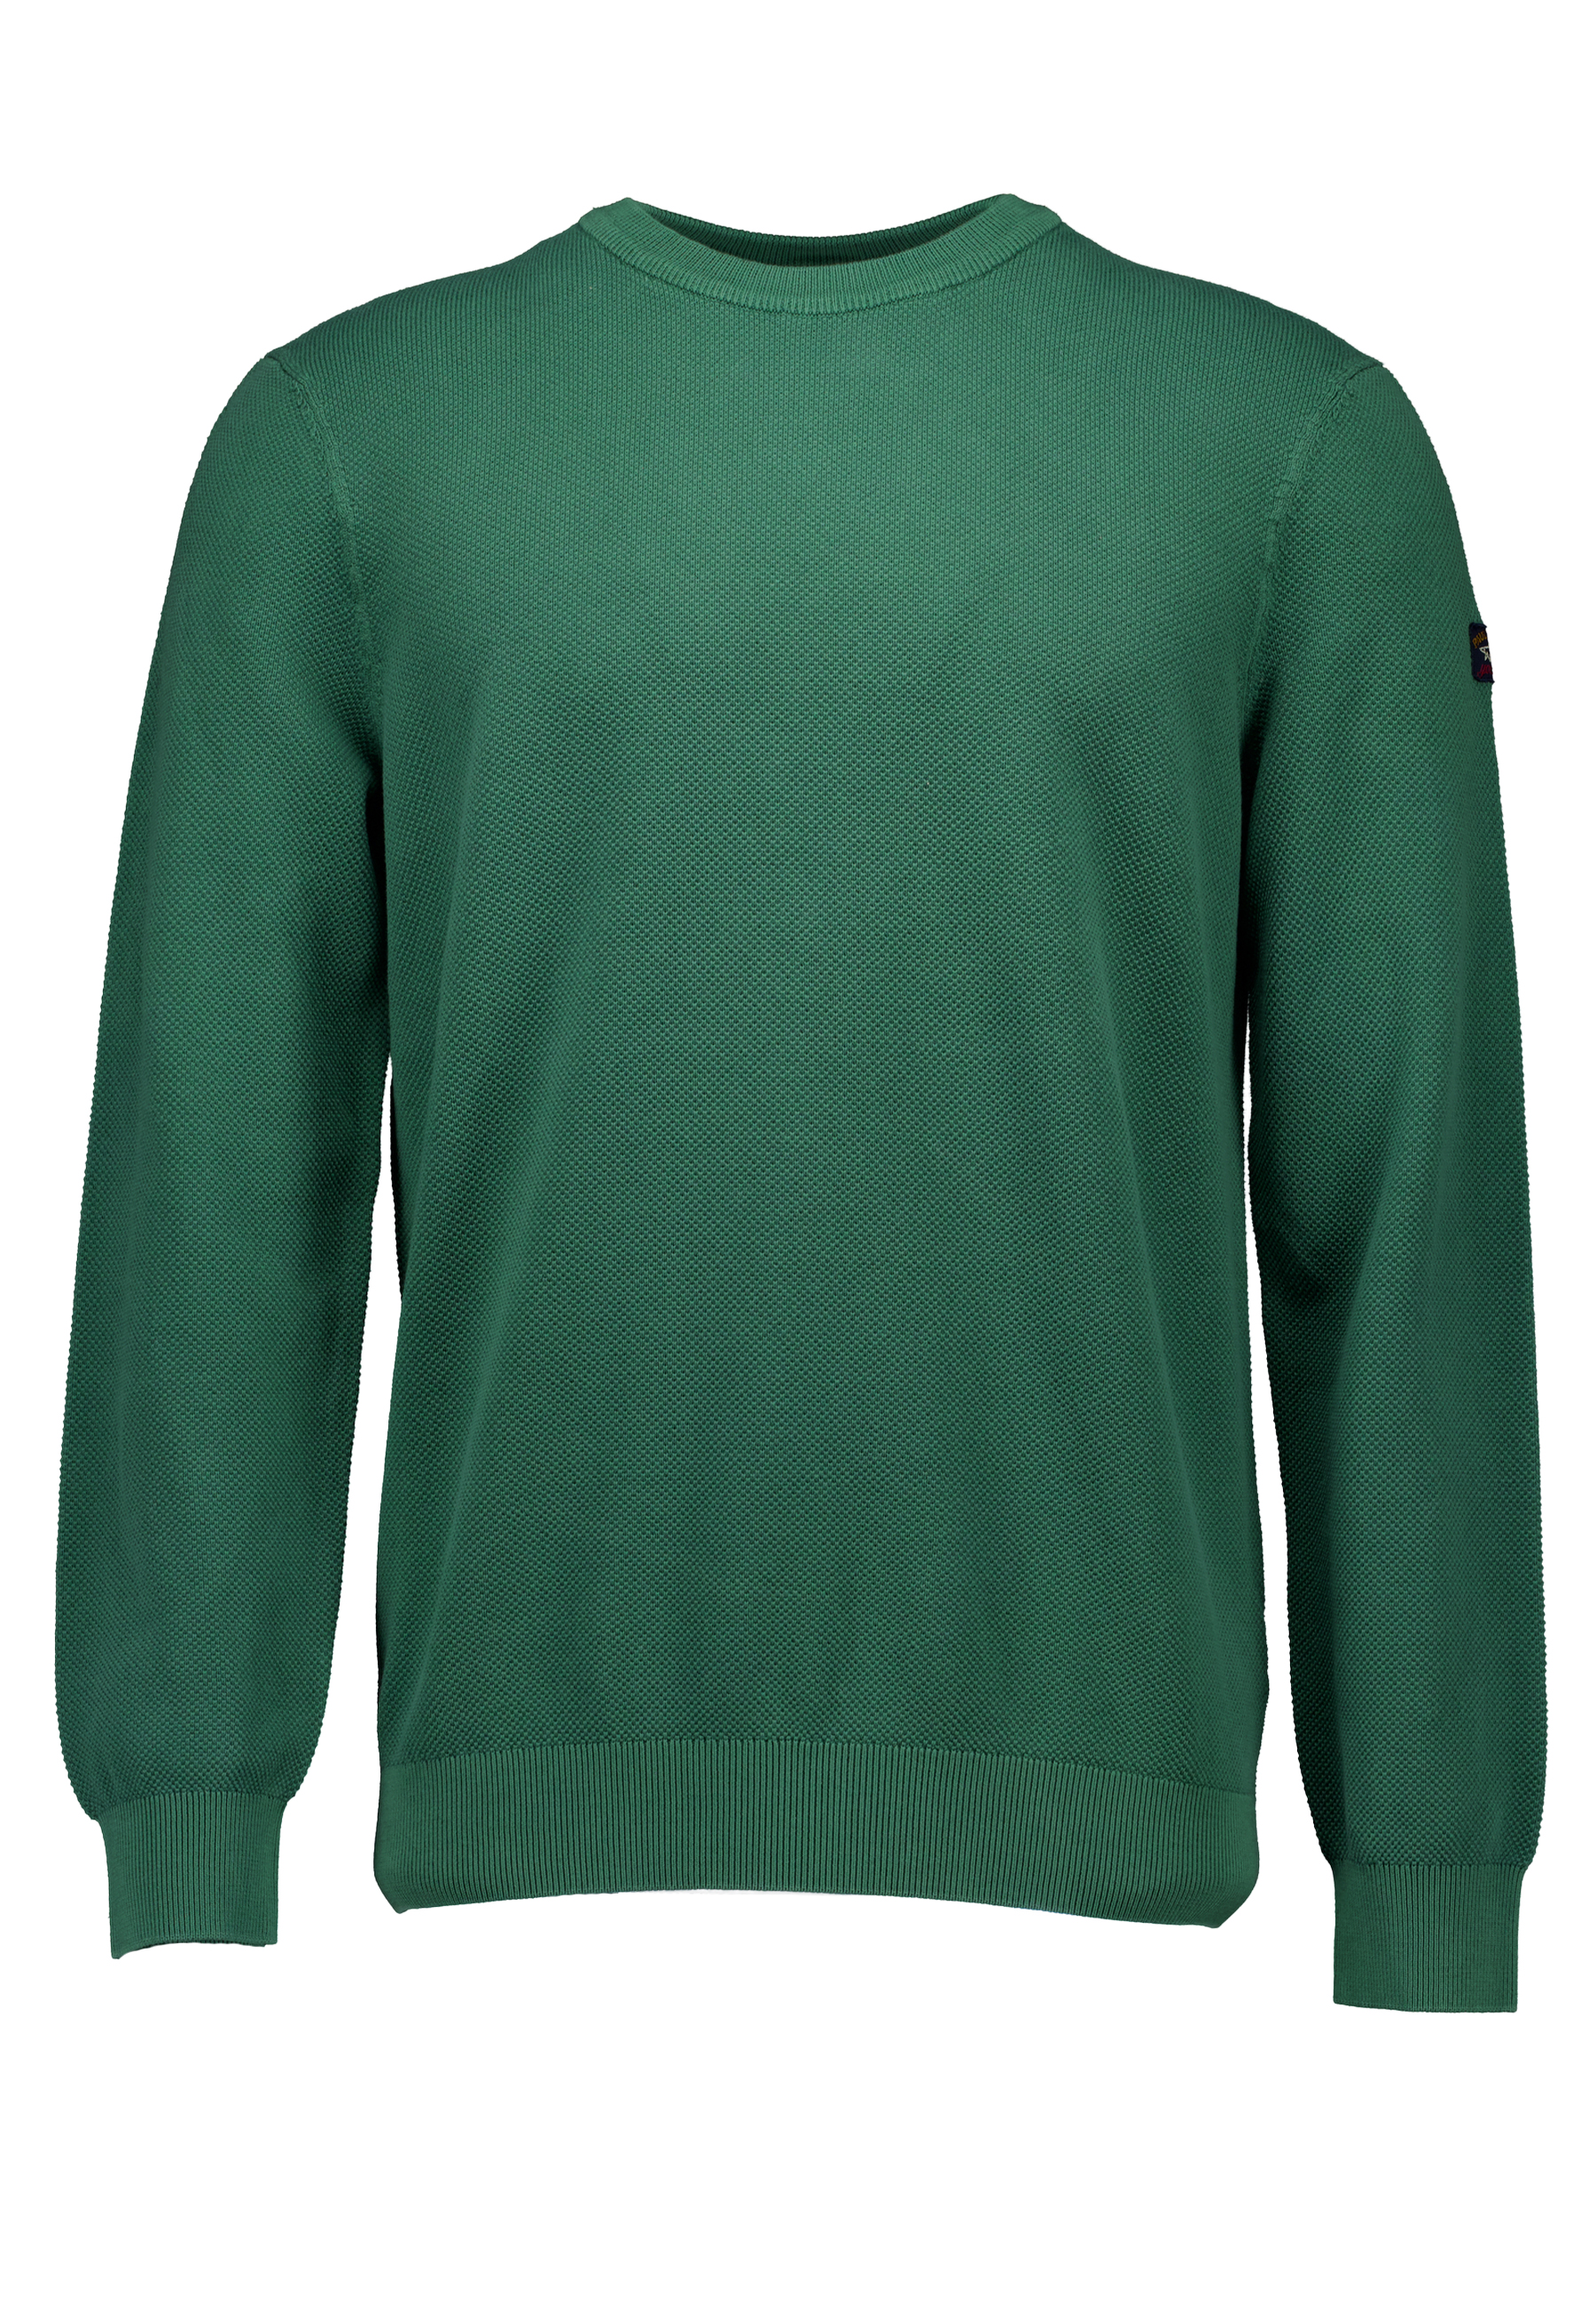 Paul & Shark Trui Groen maat M Garment dyed sweaters groen